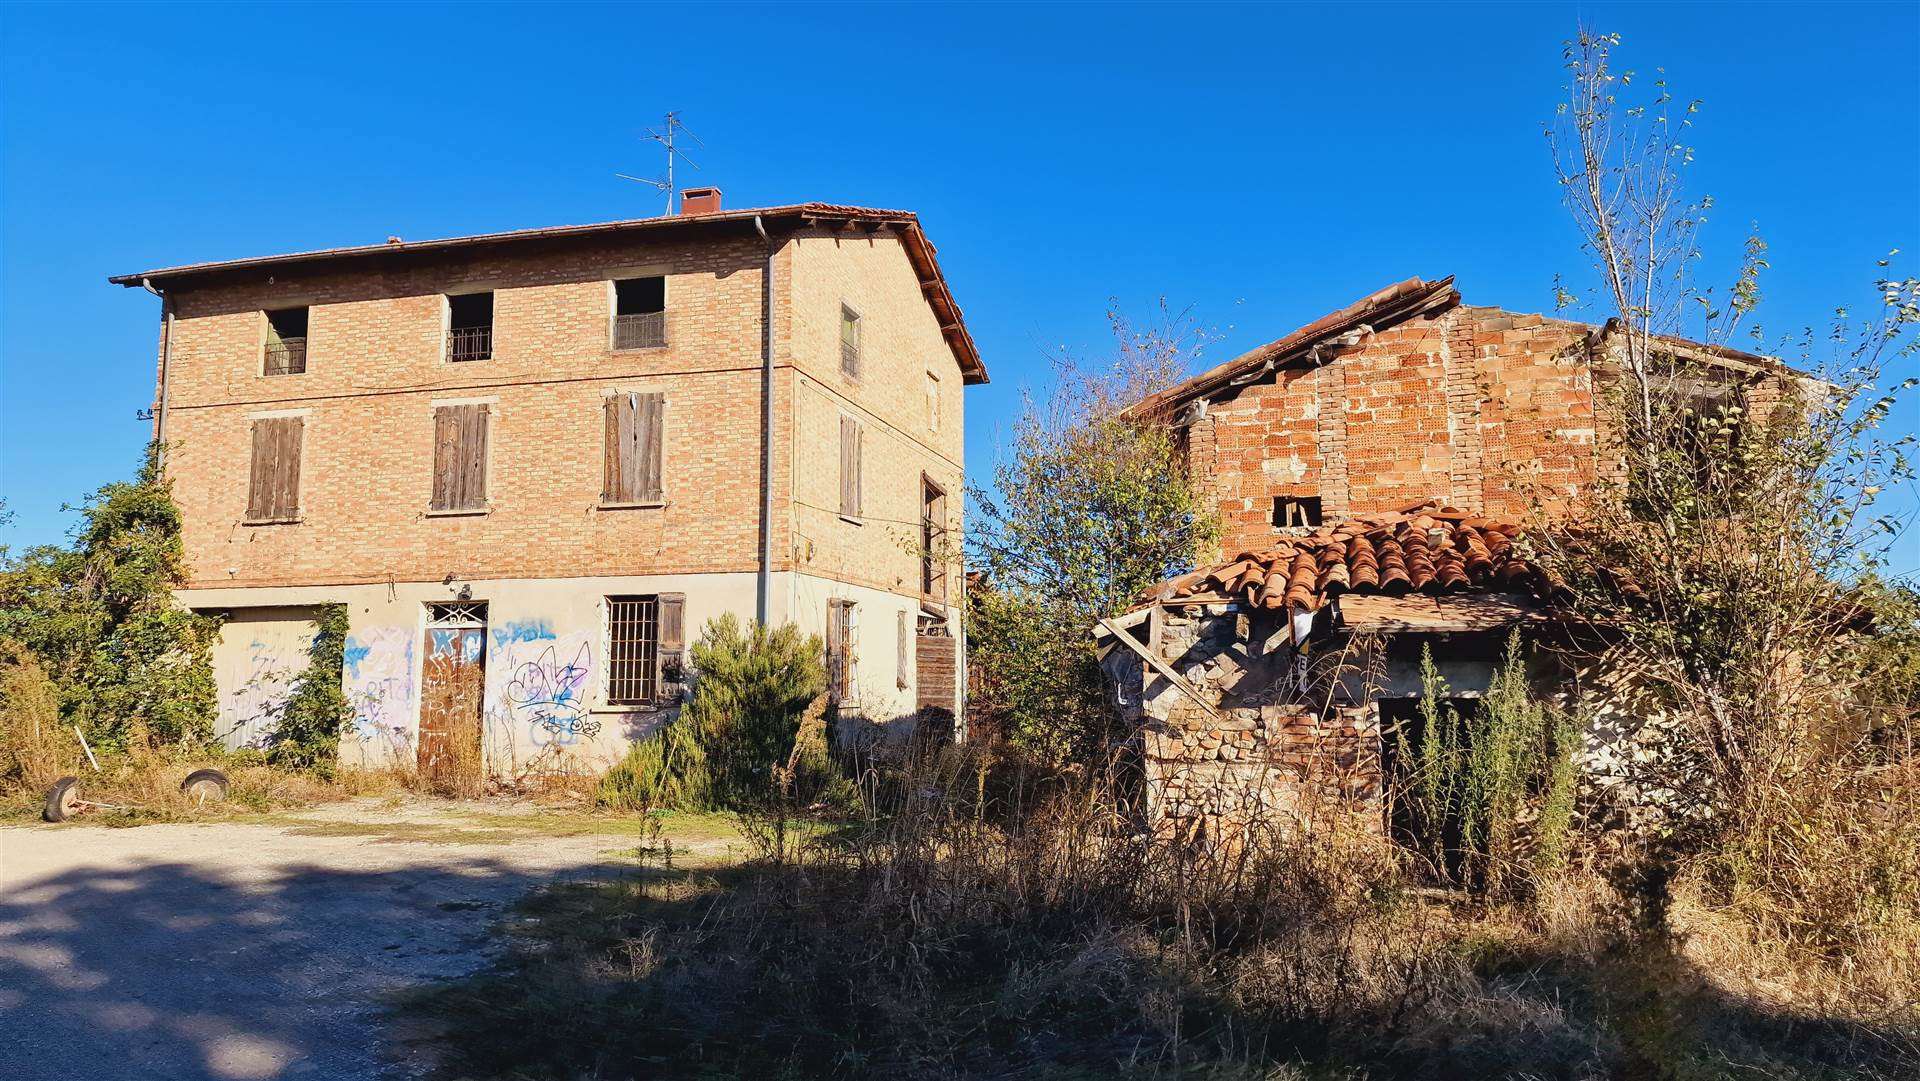 Rustico casale in vendita a Vignola Modena